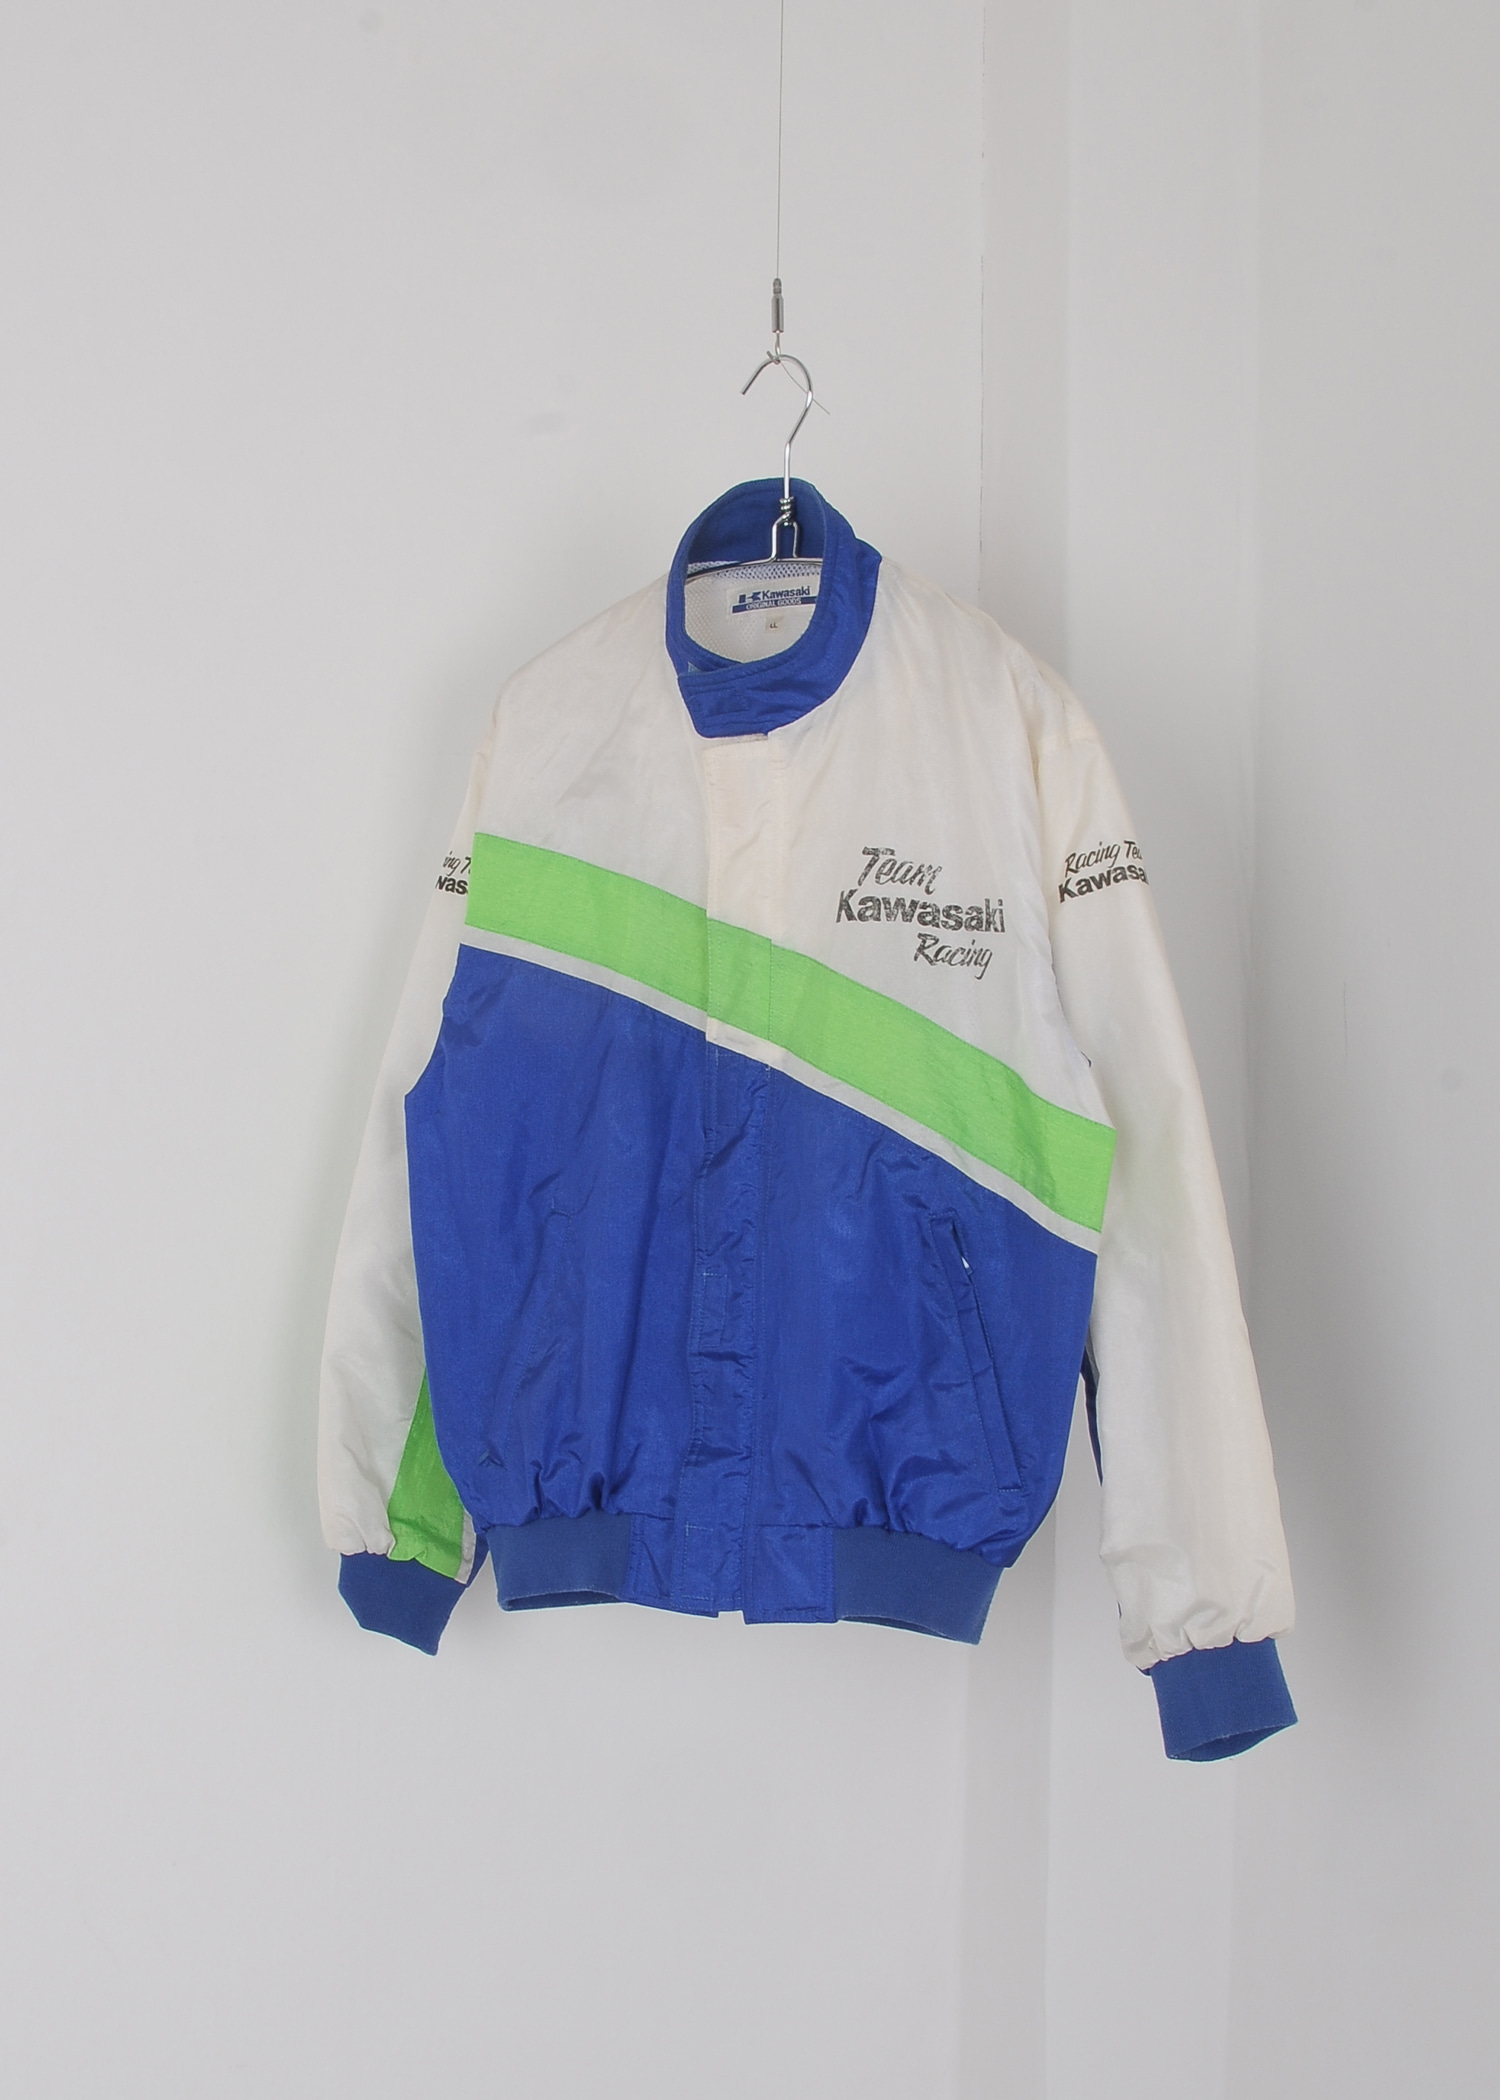 Kawasaki Racing jacket